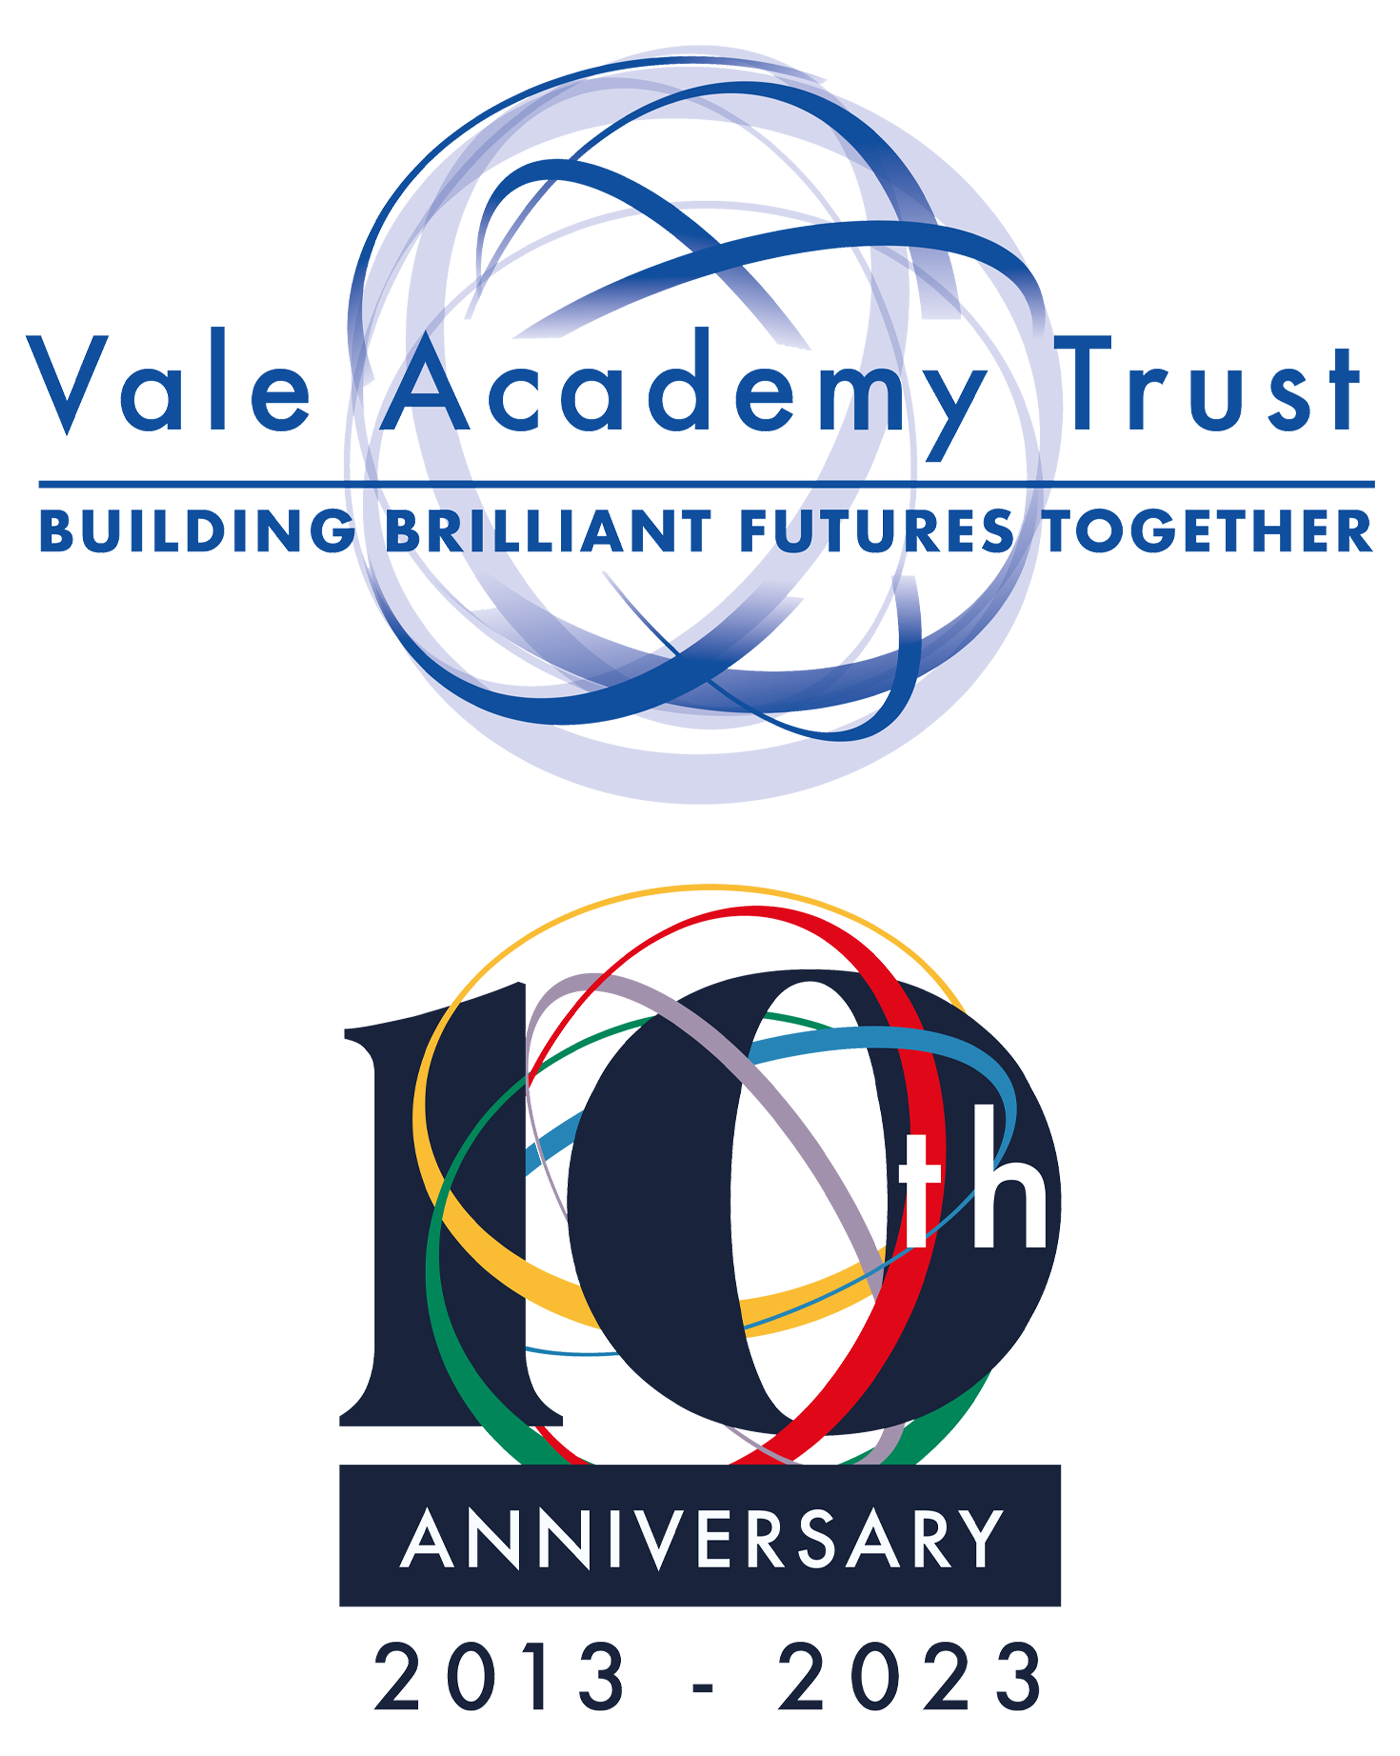 Vale Academy Trust